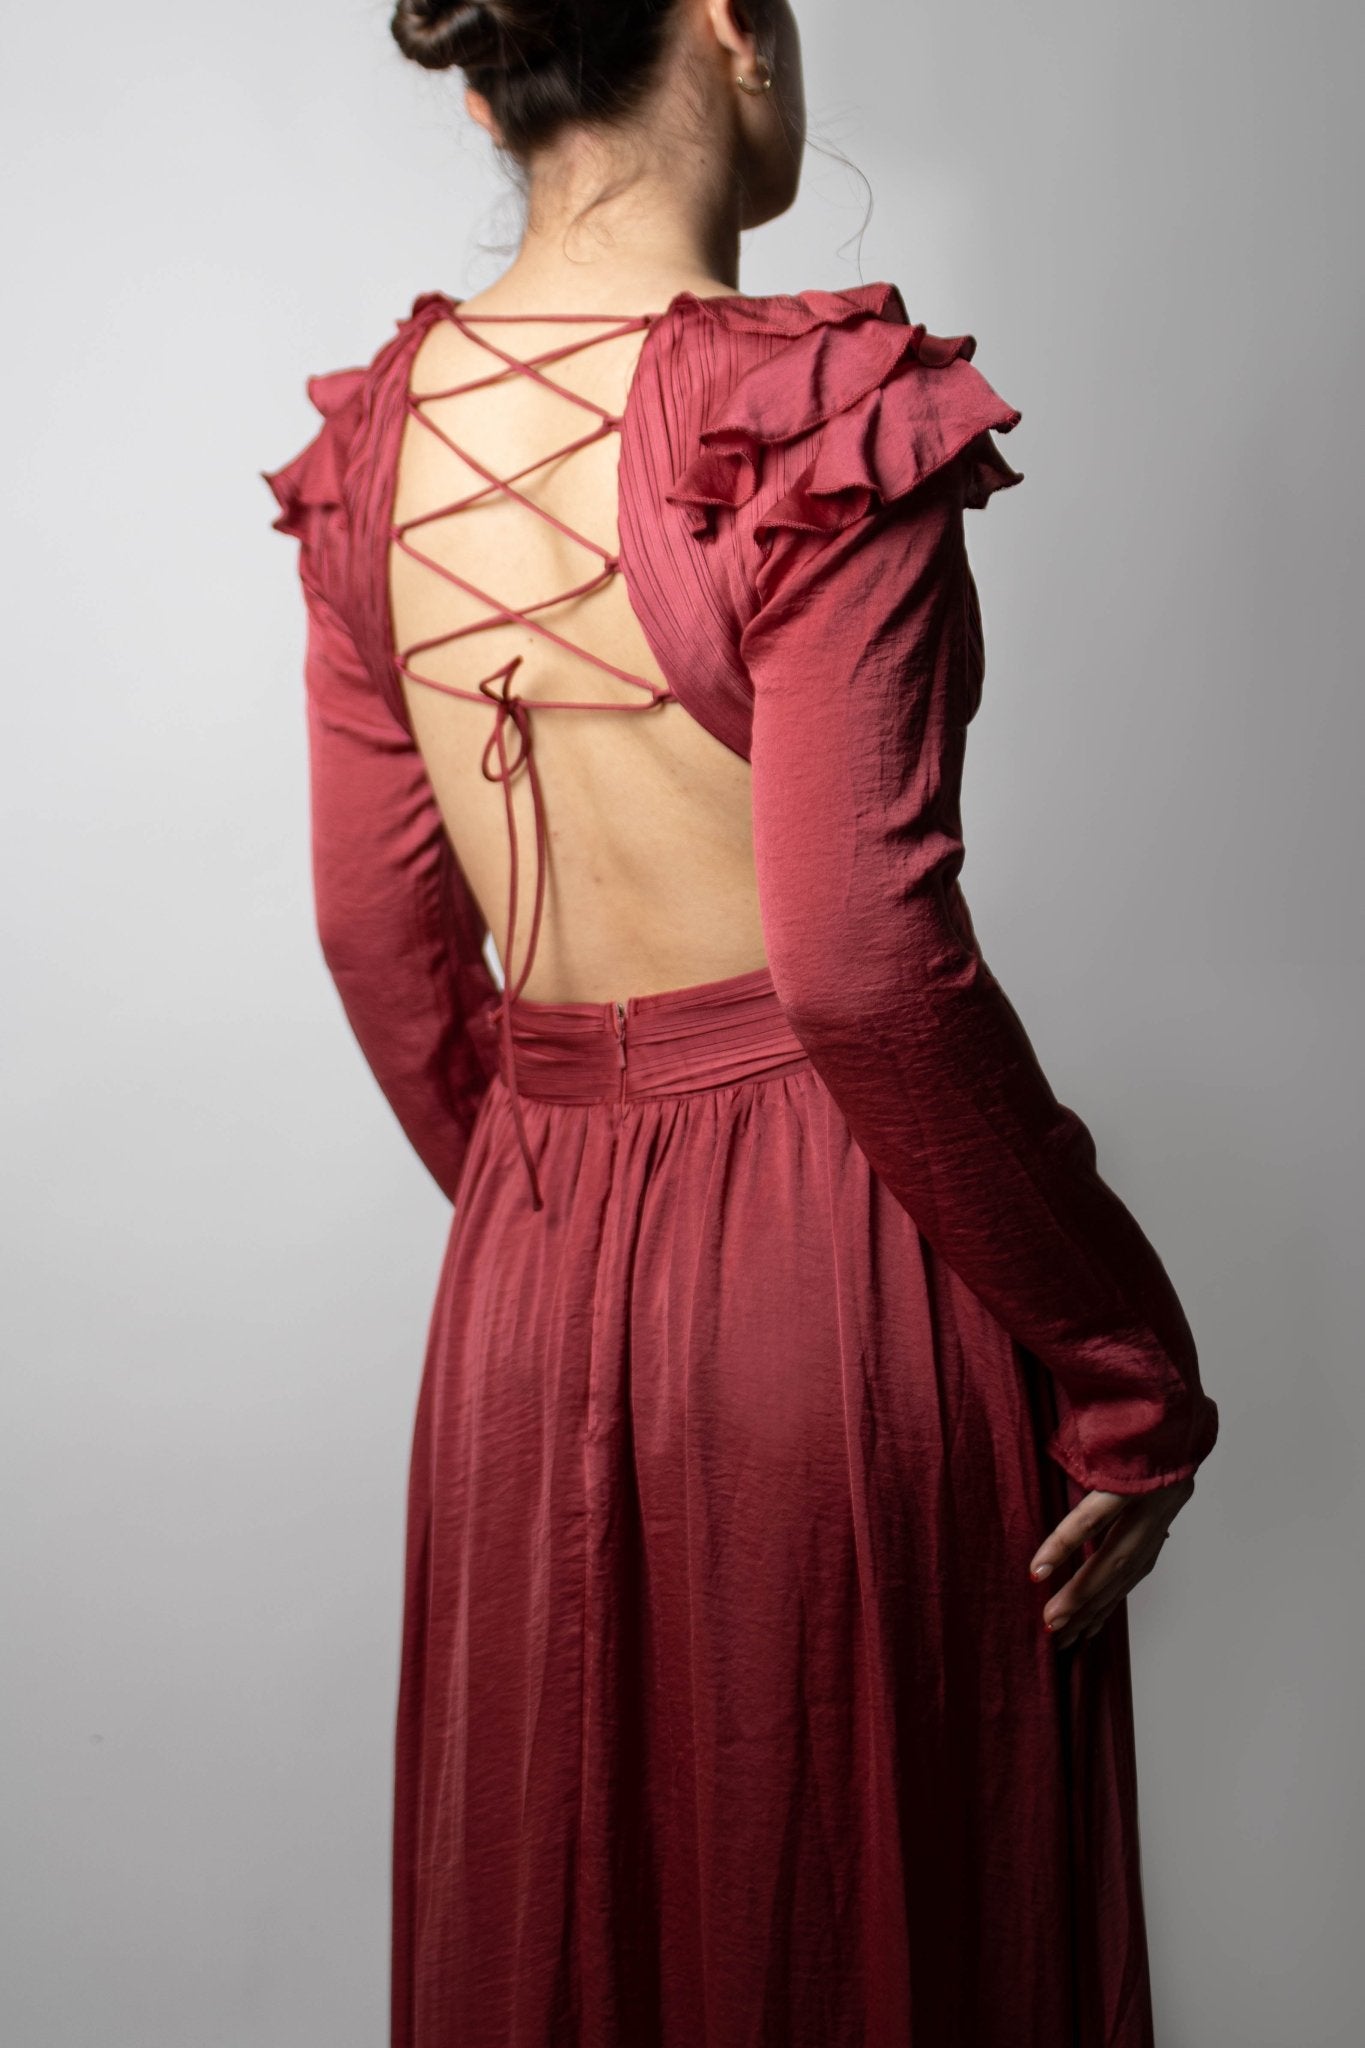 Micaela - rosa rojizo venta - Lend the Trend renta de vestidos mexico